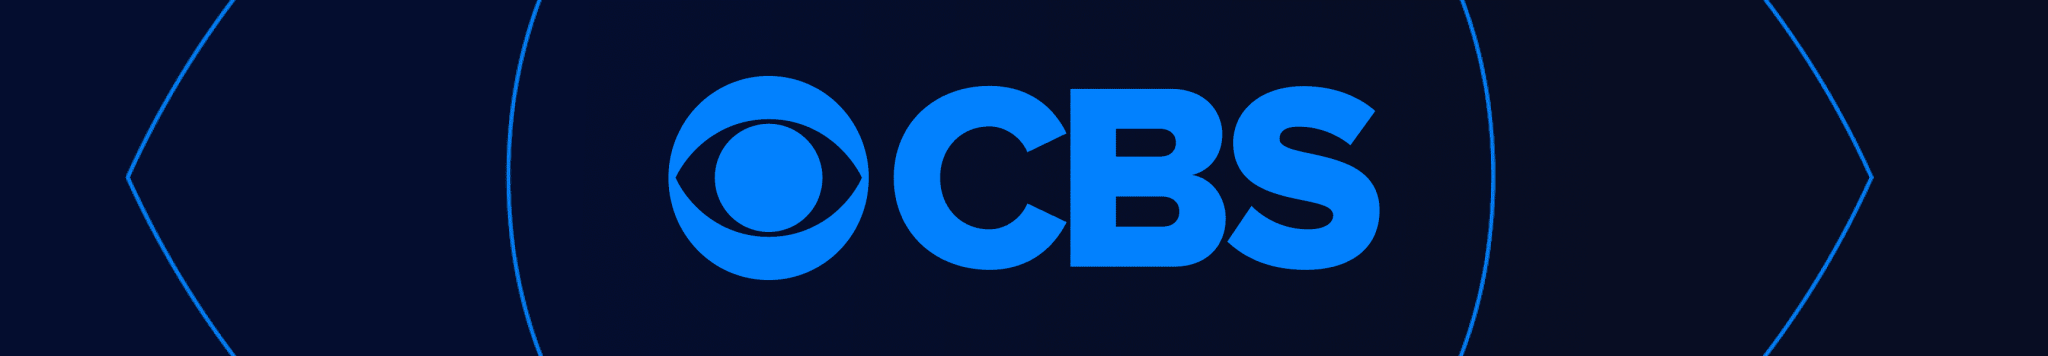 CBS Entertainment Robes